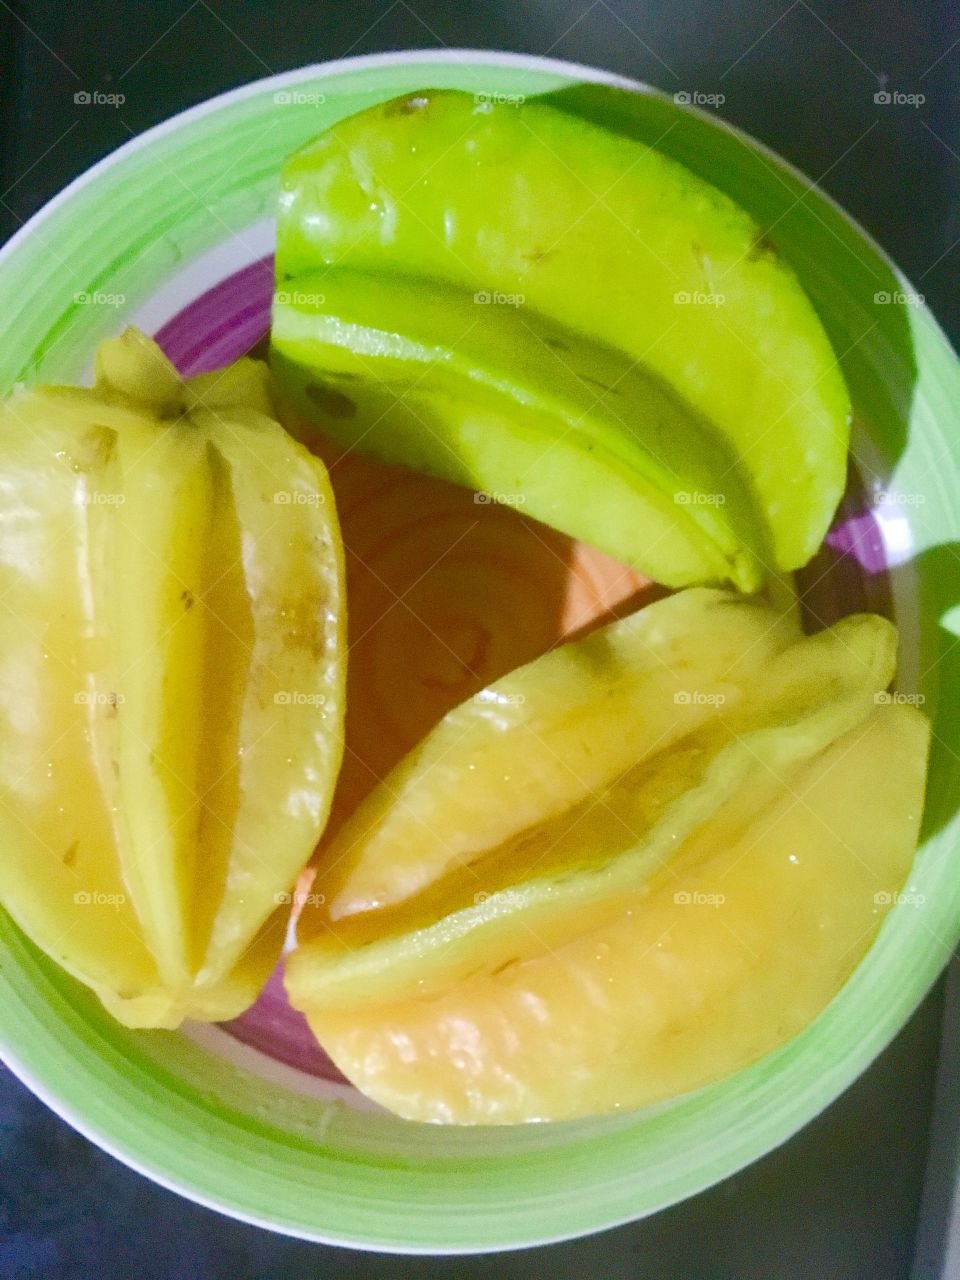 Tropical Fruit (Starfruit)